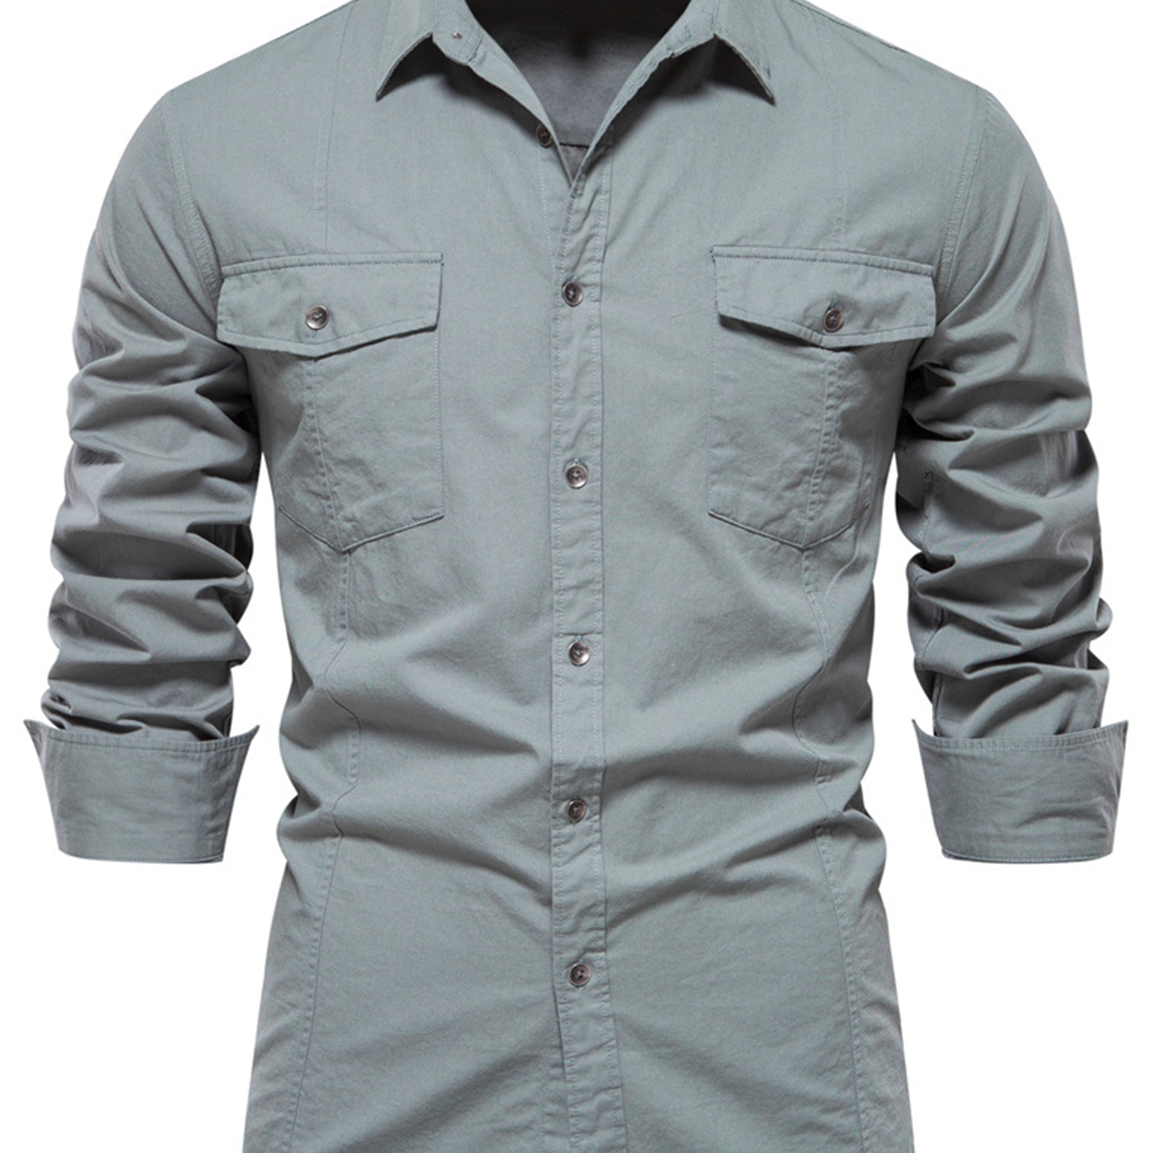 Men's Cotton Casual Outdoor Pocket Long Sleeve Shirt